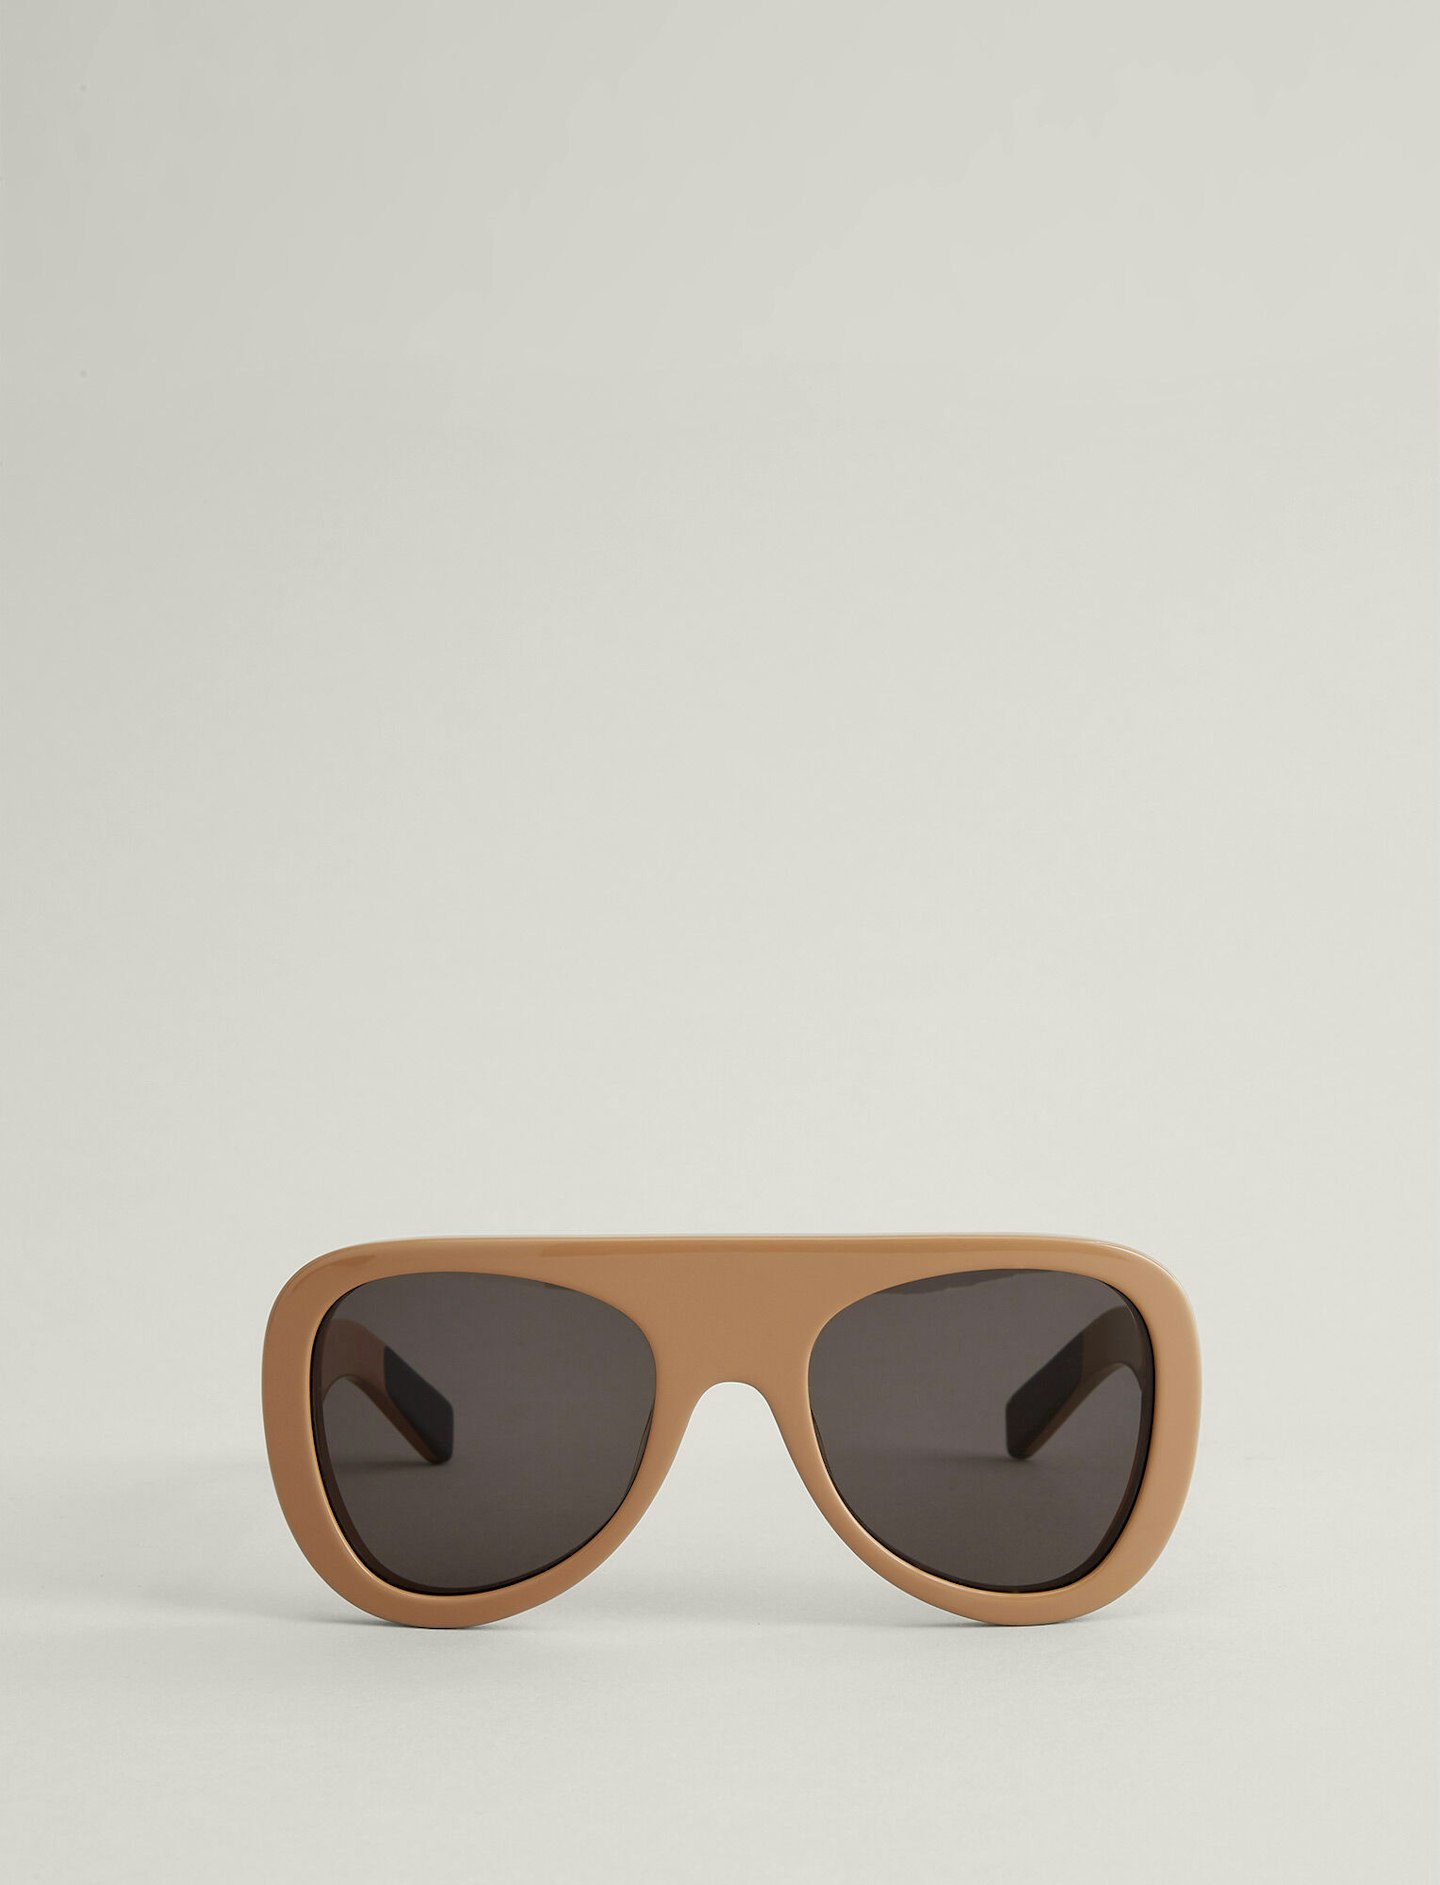 Joseph, Chelsea Sunglasses, £185